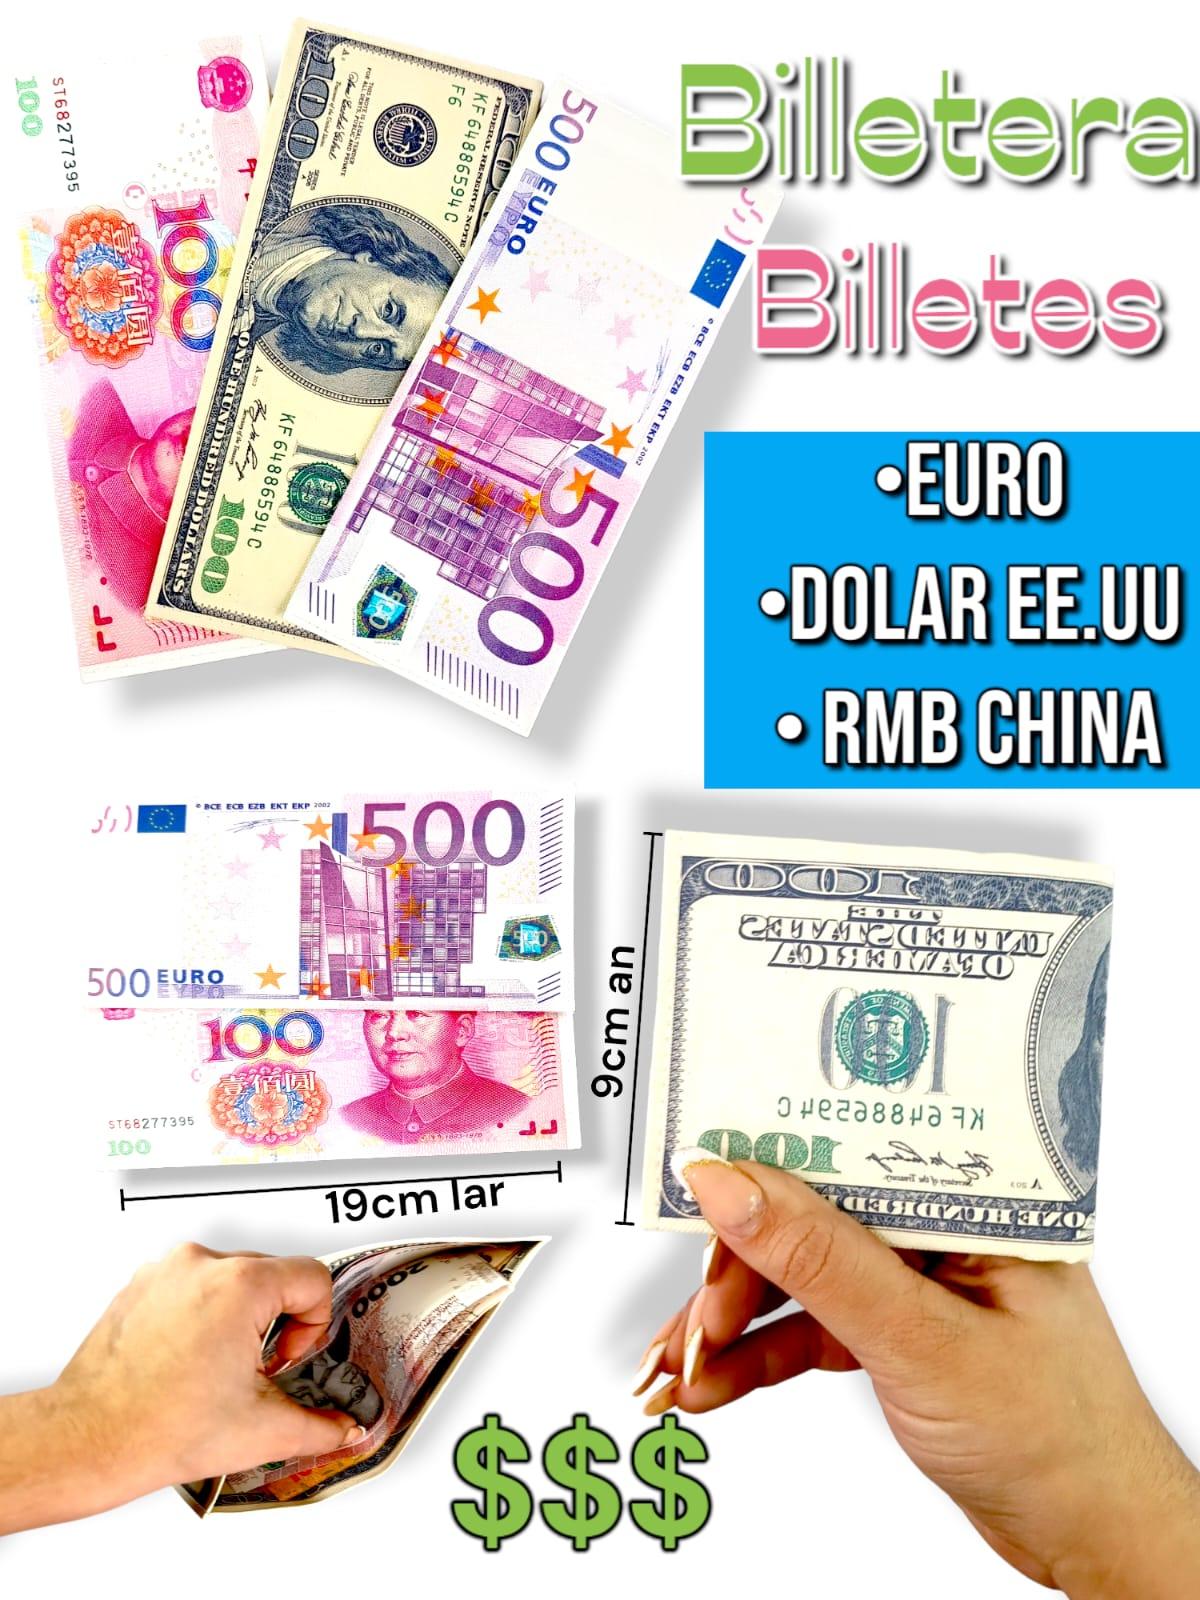 Billetera Billetes ( Euro, Dolar EE.UU, RMB china)19cm